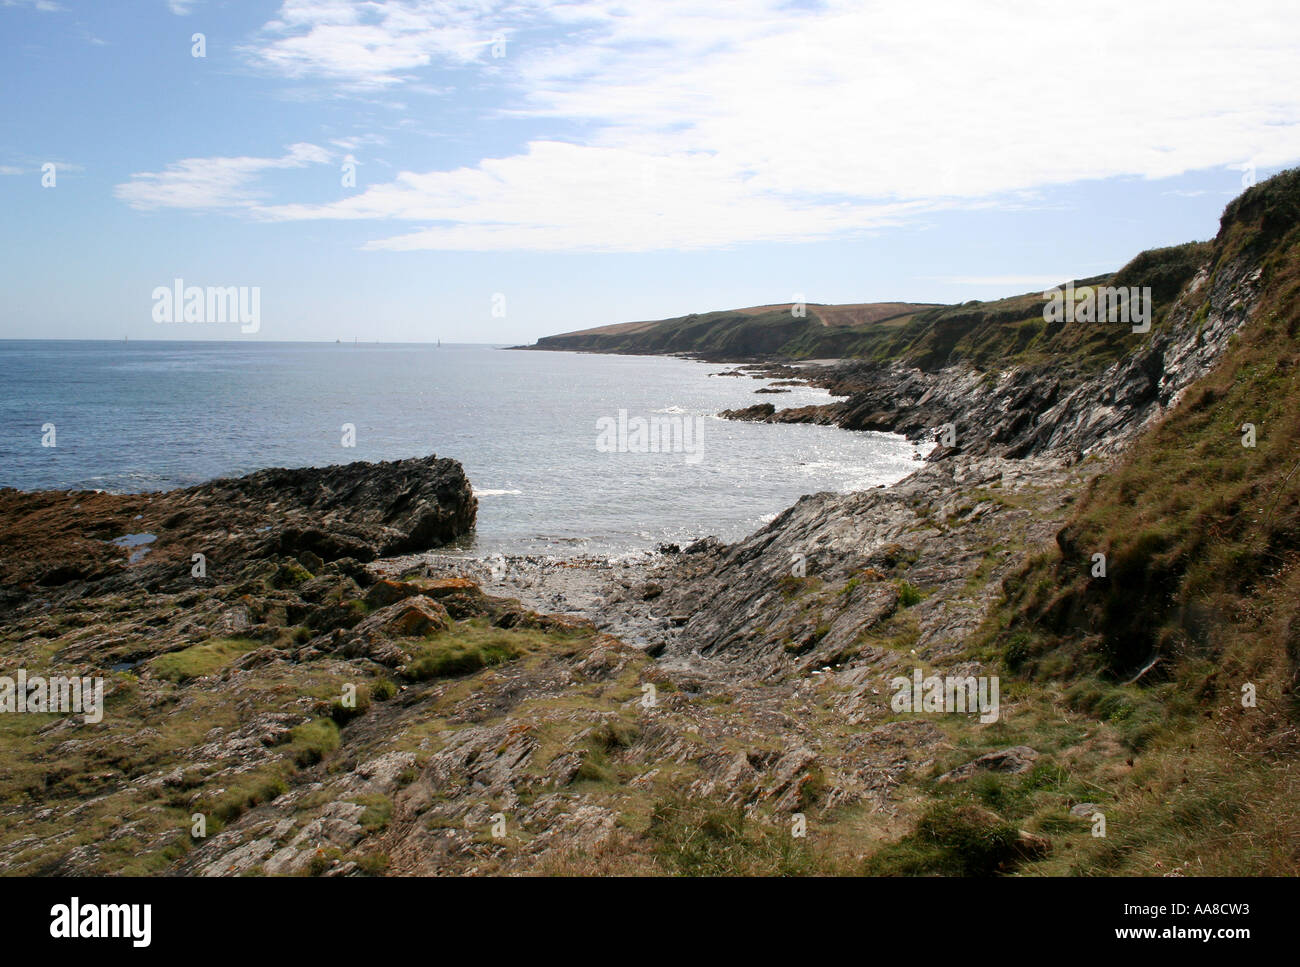 Coast and sea view from the rocks at Portscatho, Cornwall, England Stock Photo